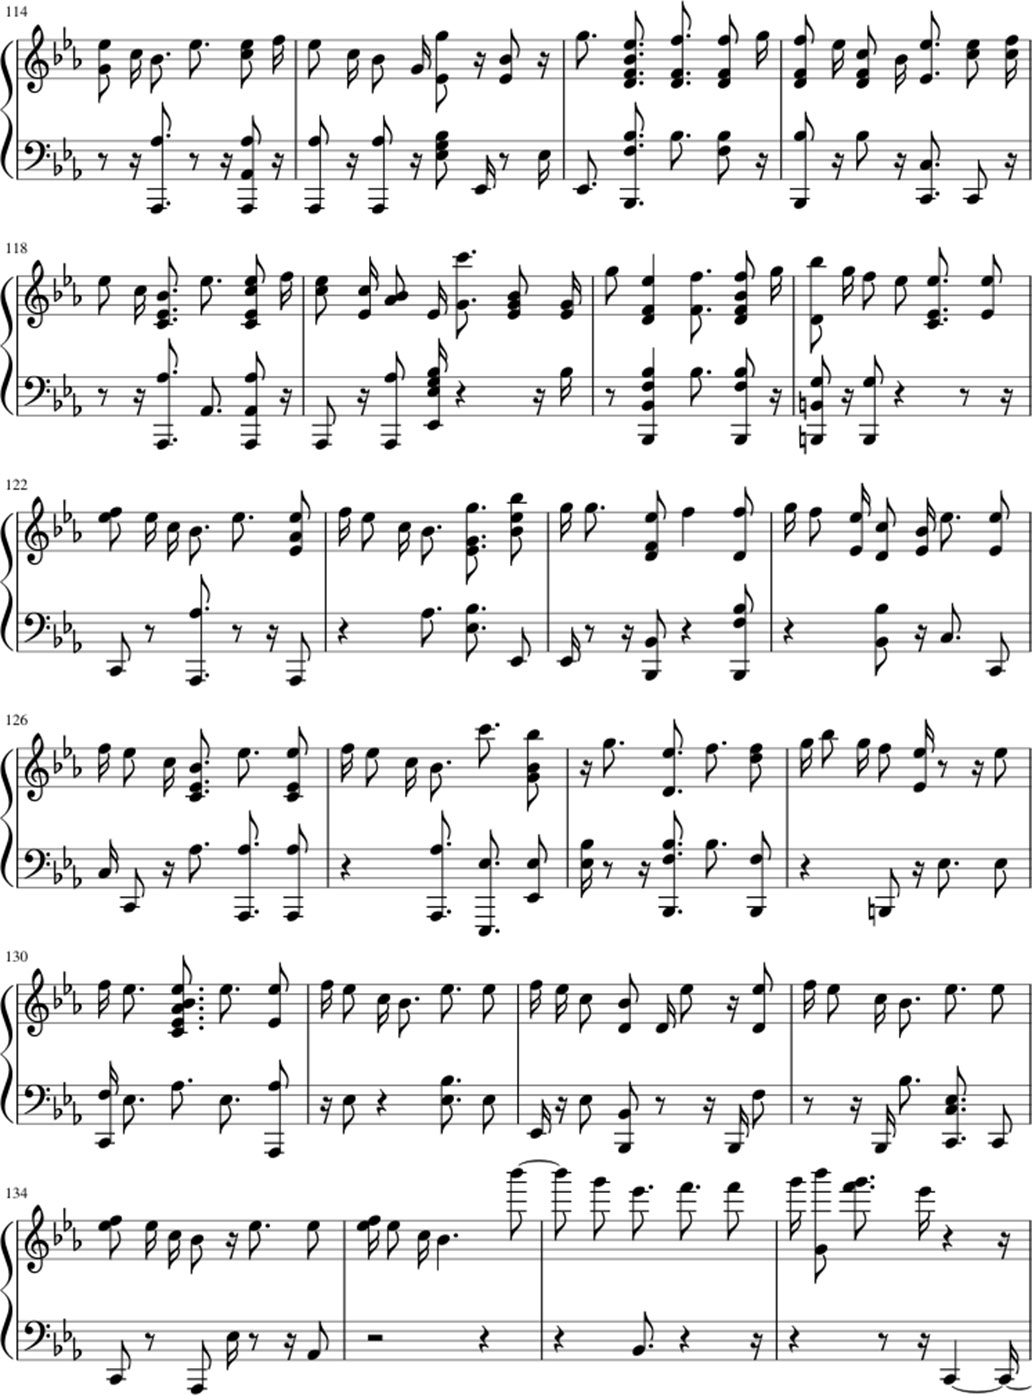 Windfall sheet music notes 5